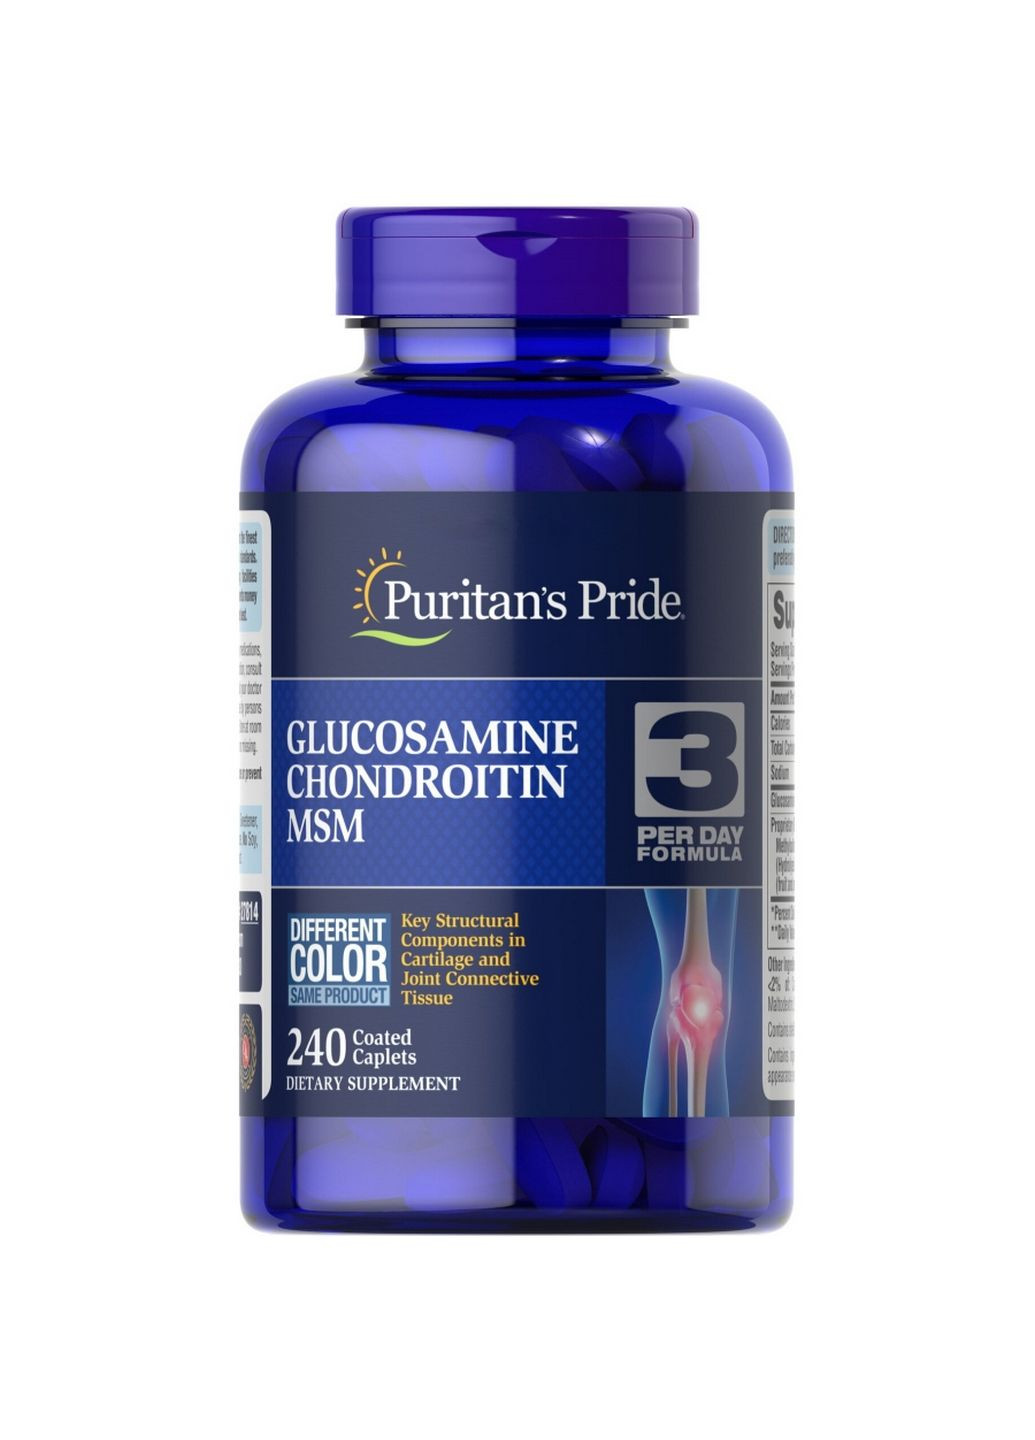 Препарат для суставов и связок Chondroitin Glucosamine MSM 3 Per Day Formula, 240 каплет Puritans Pride (293339067)